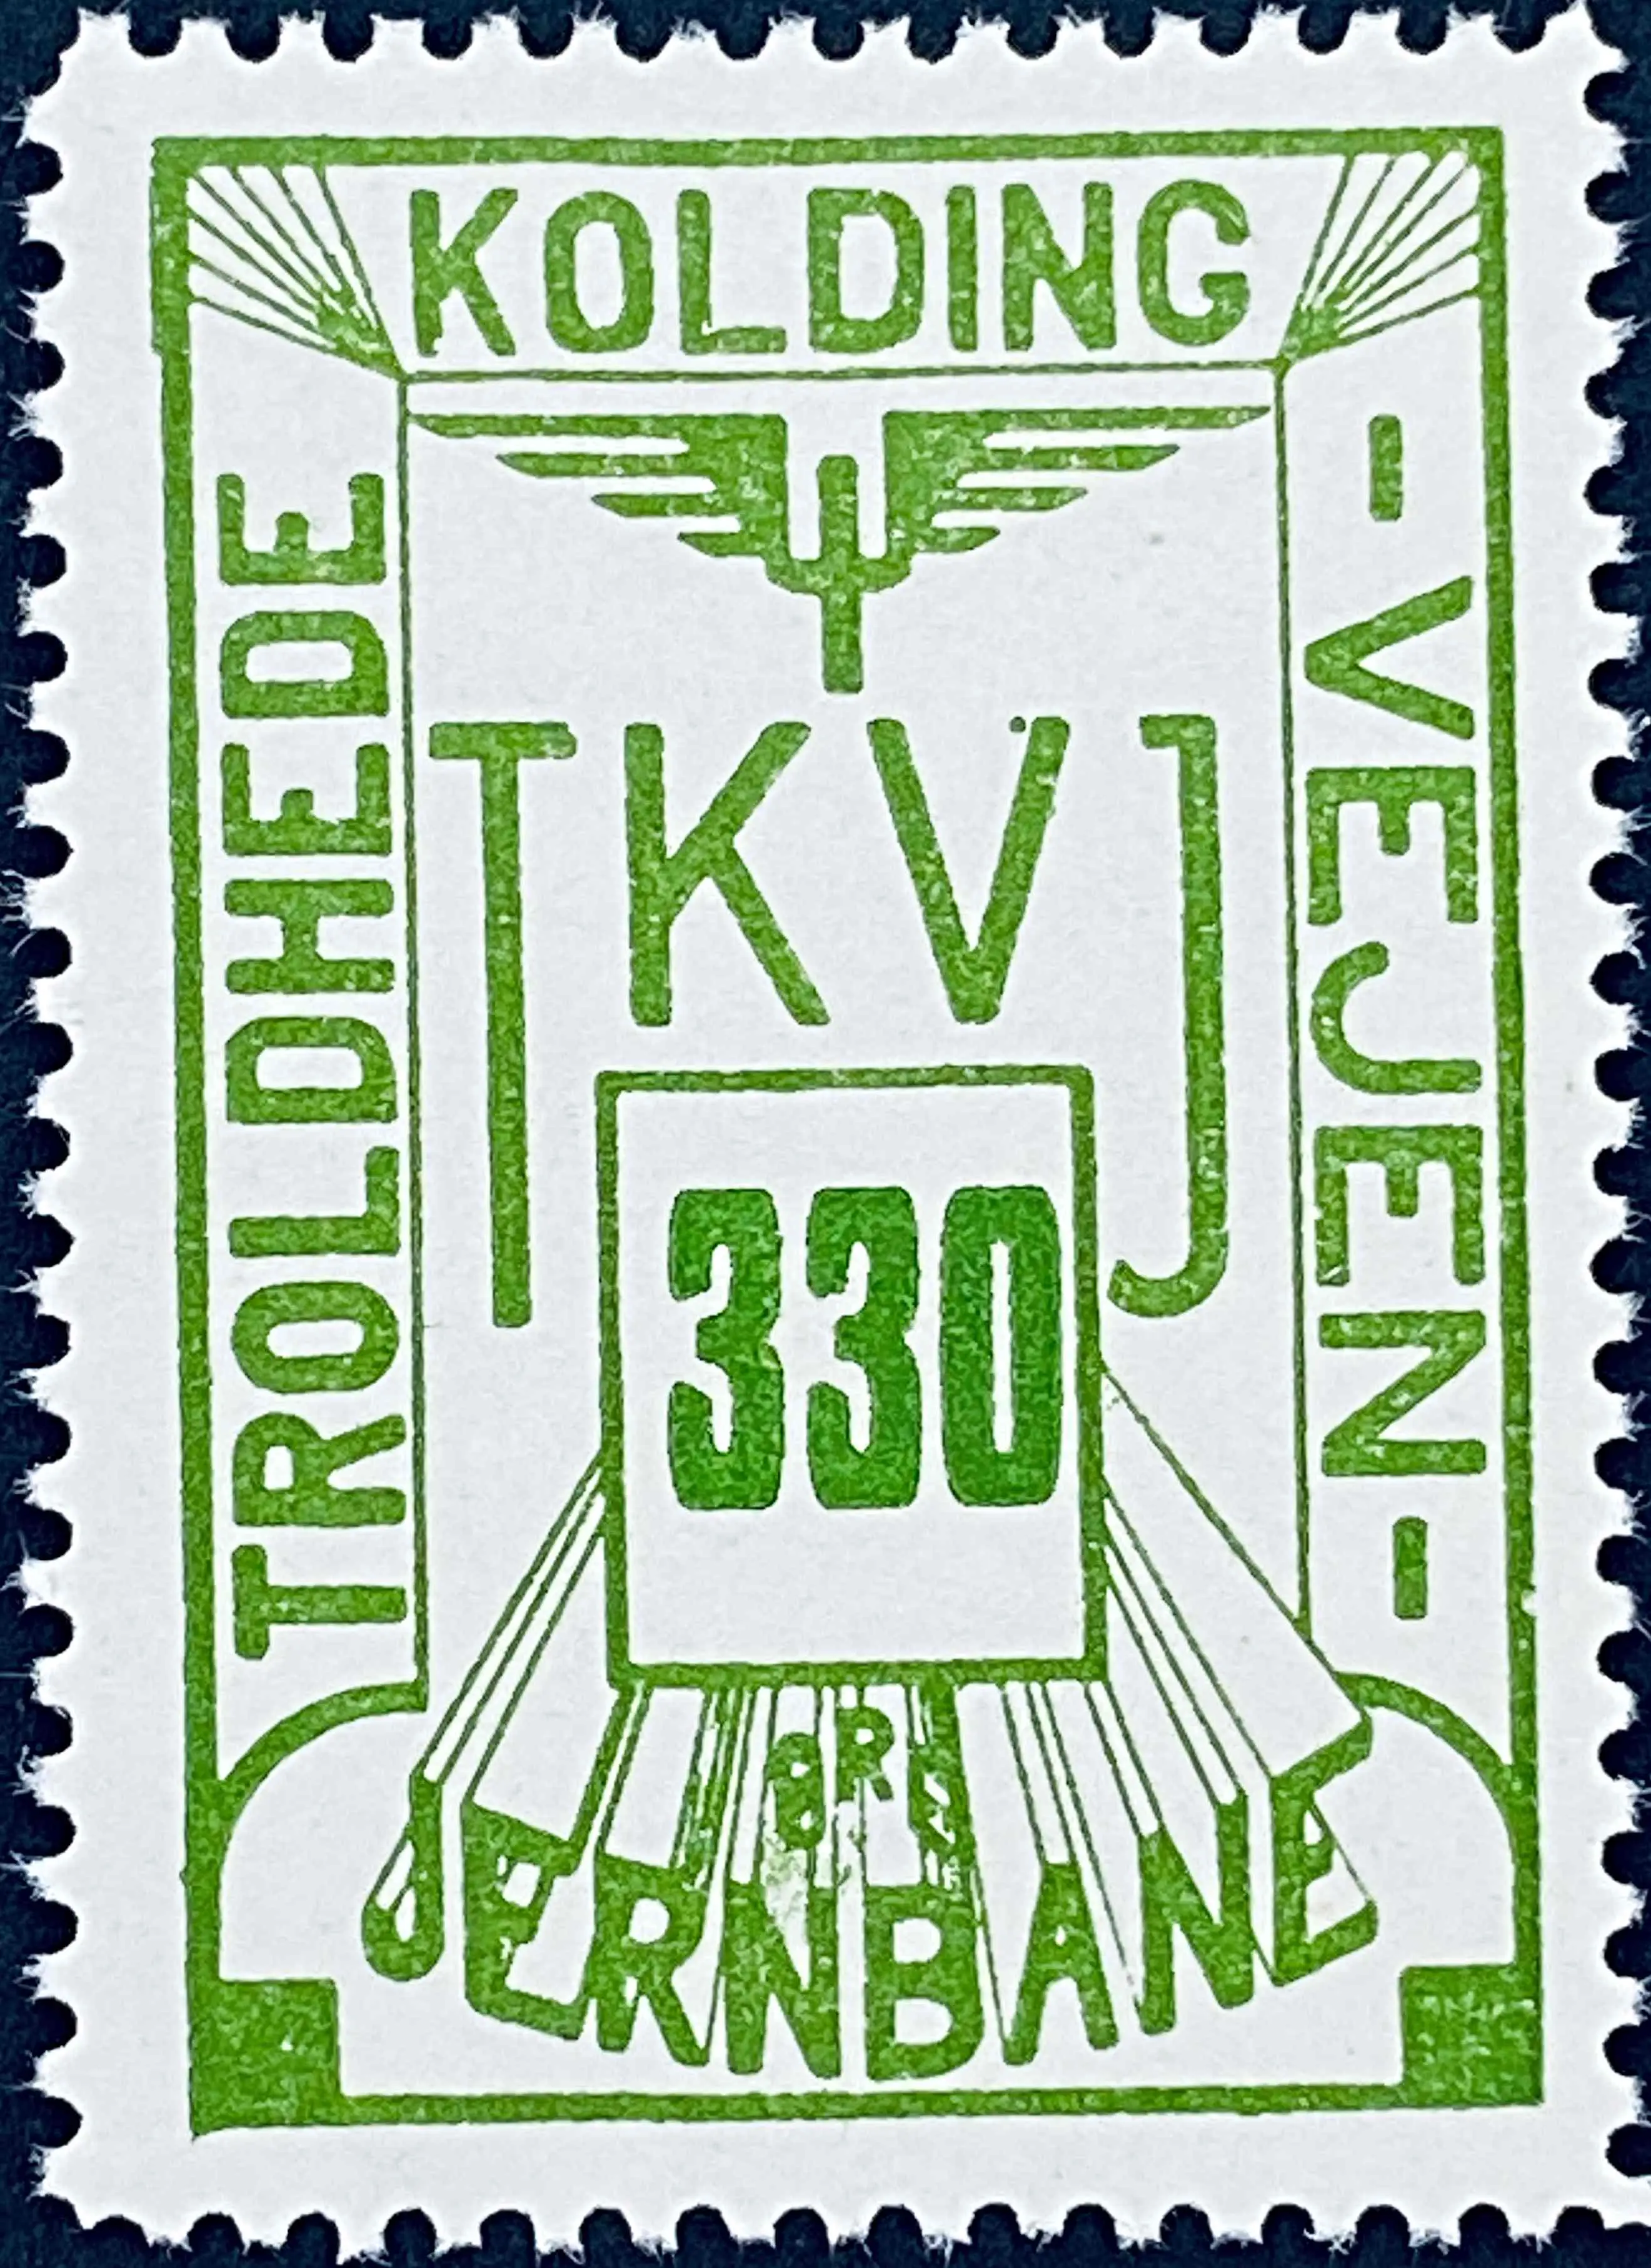 TKVJ 83 - 330 Øre - Grøn.